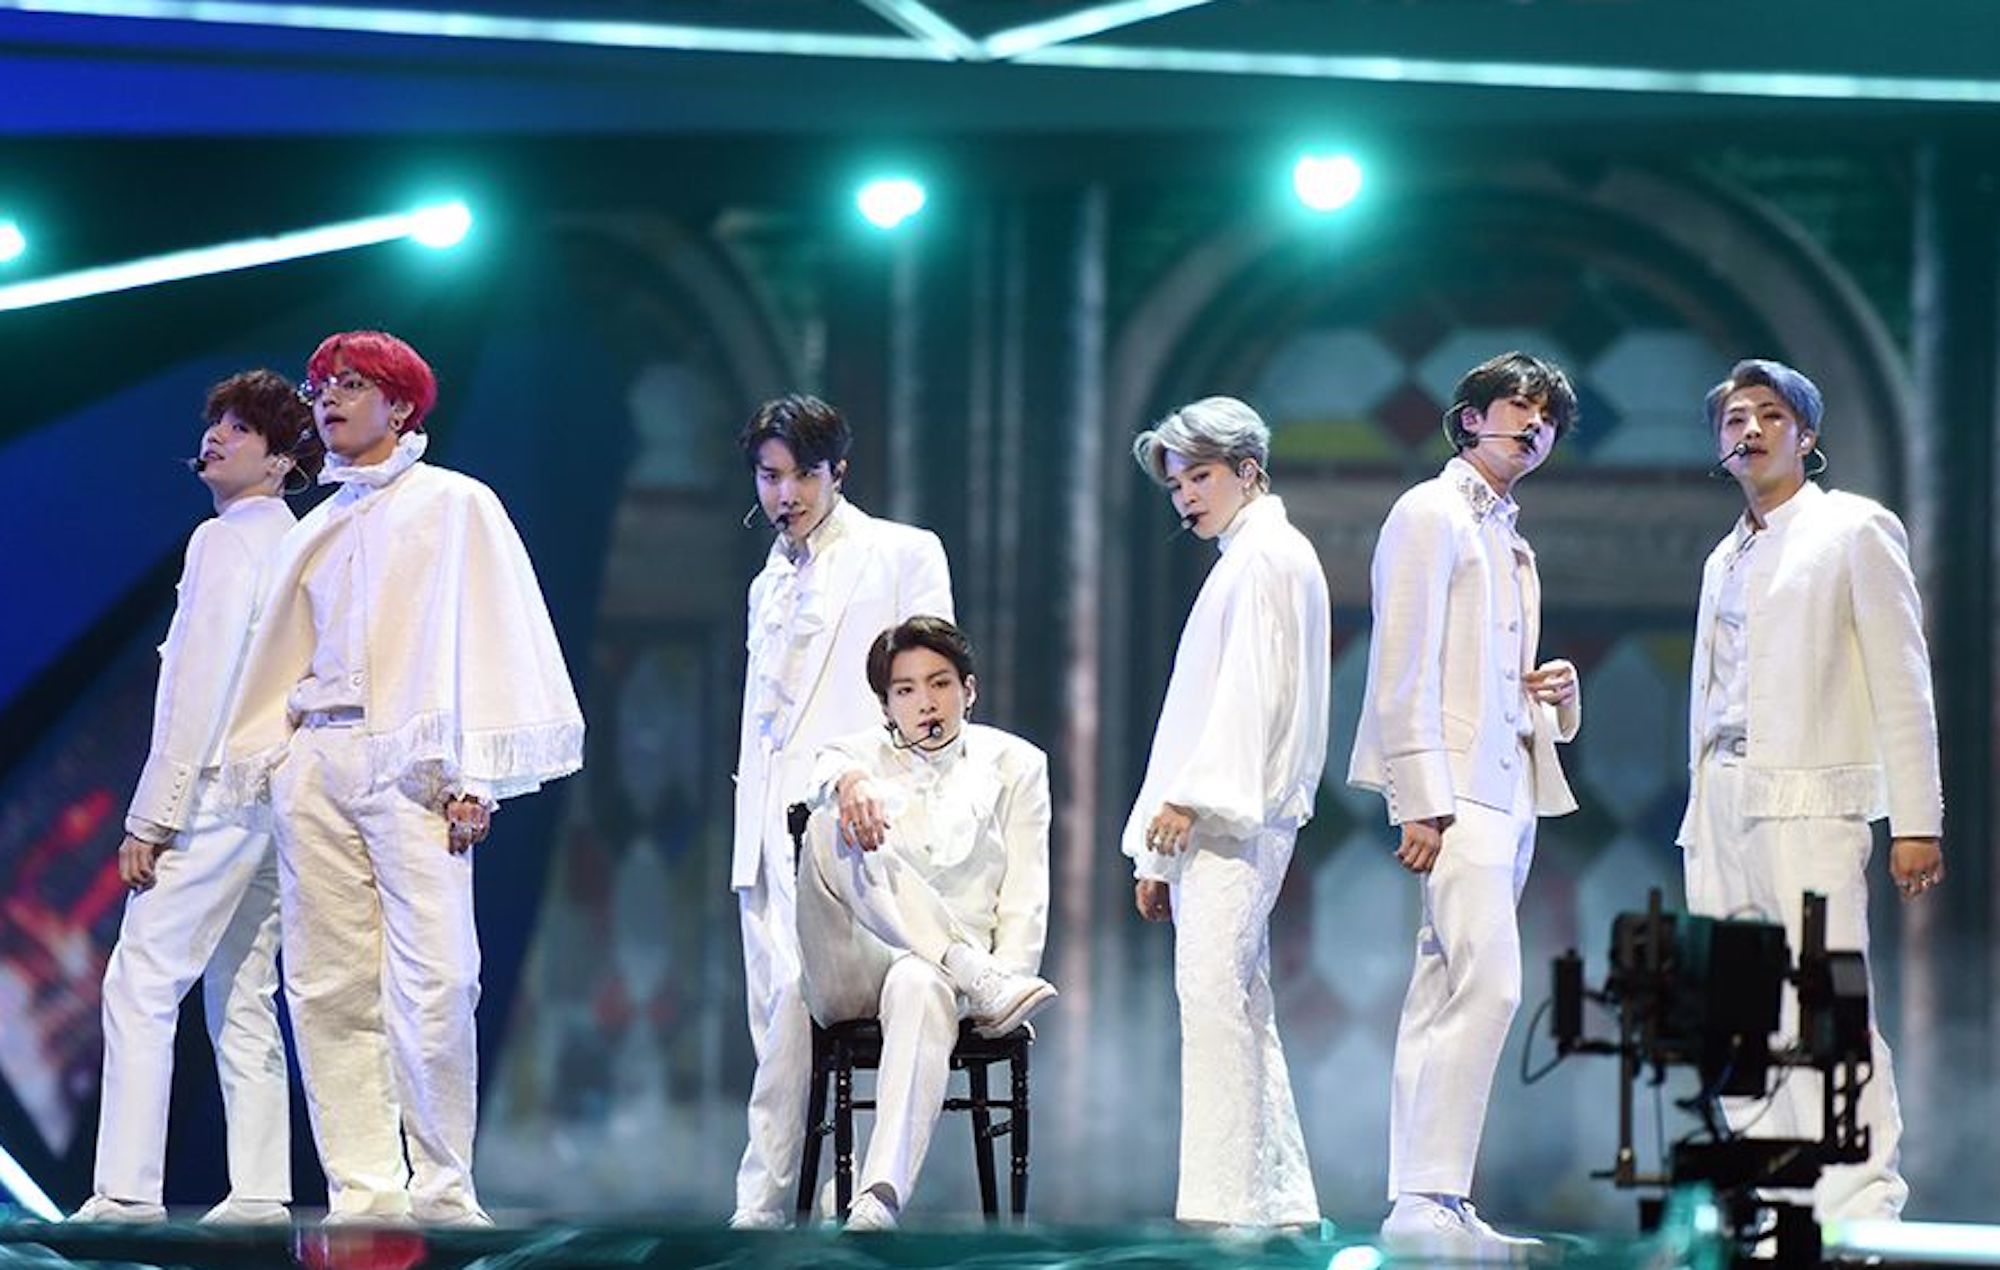 Mandatory Credit: Photo by Imaginechina/REX/Shutterstock (10035467j)
Members of South Korean boy band BTS, also known as the Bangtan Boys
Mnet Asian Music Awards, Hong Kong, China - 14 Dec 2018